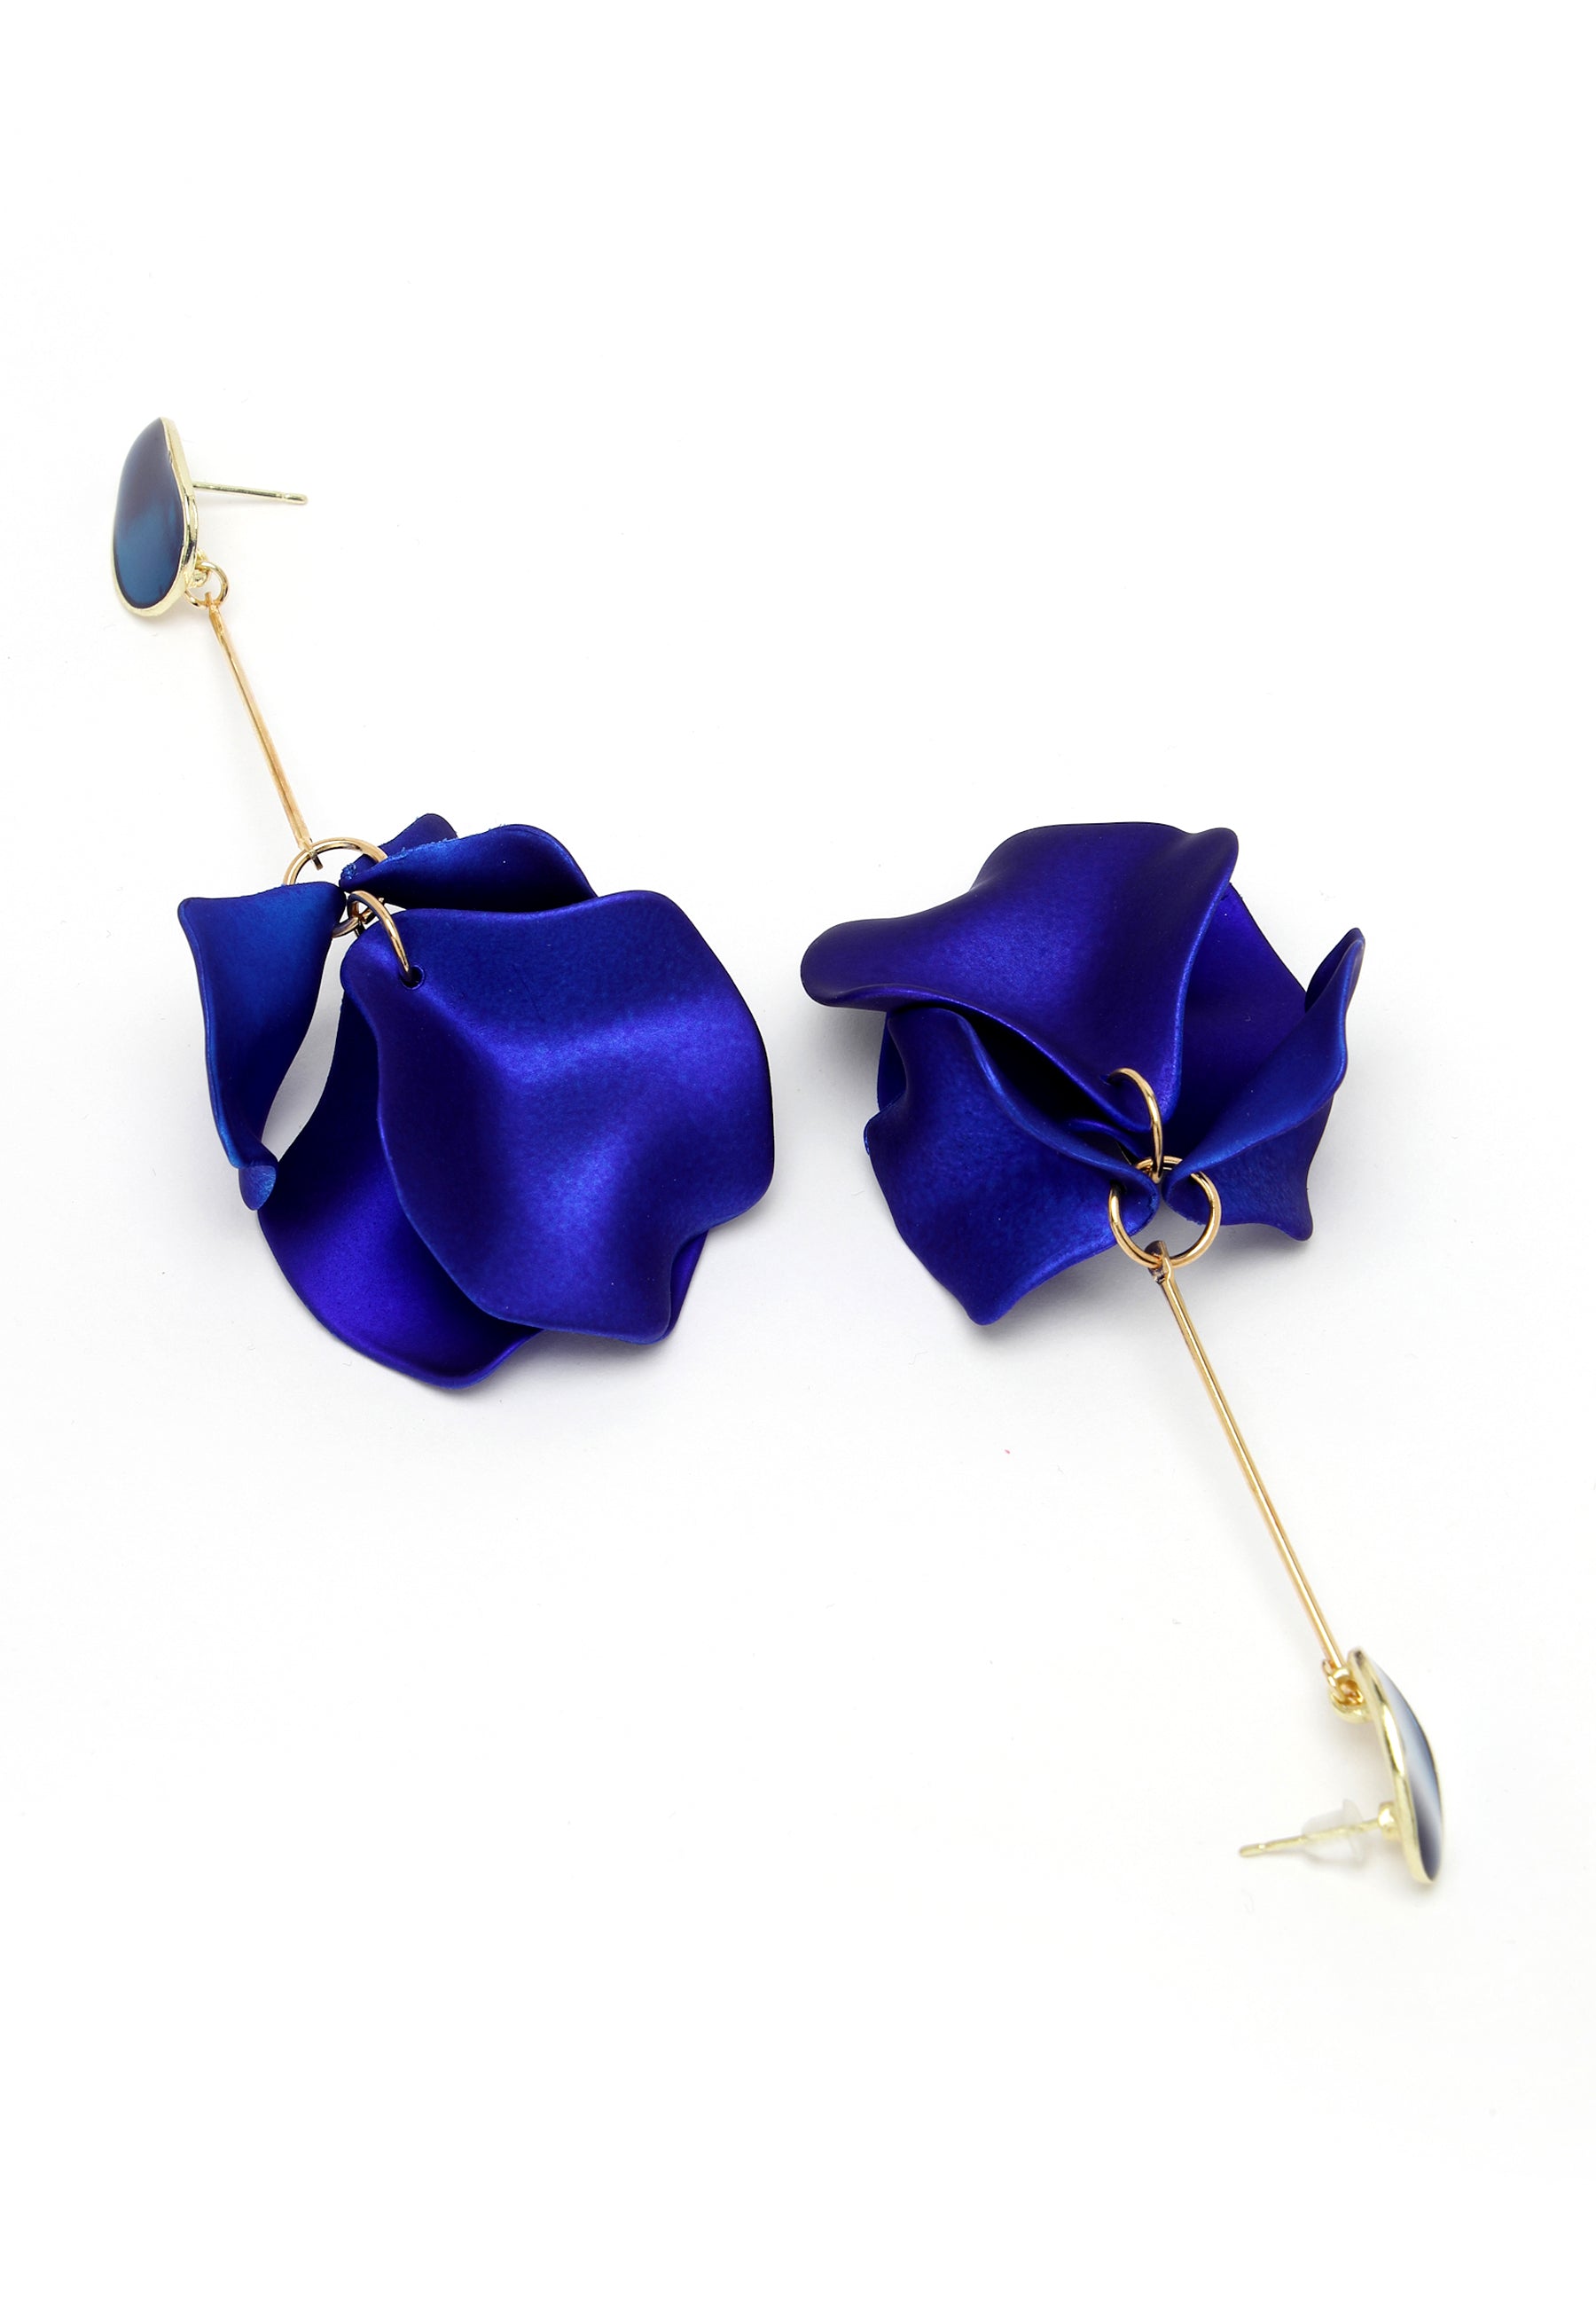 Metallisch blaue Blütenblatt-Ohrhänger